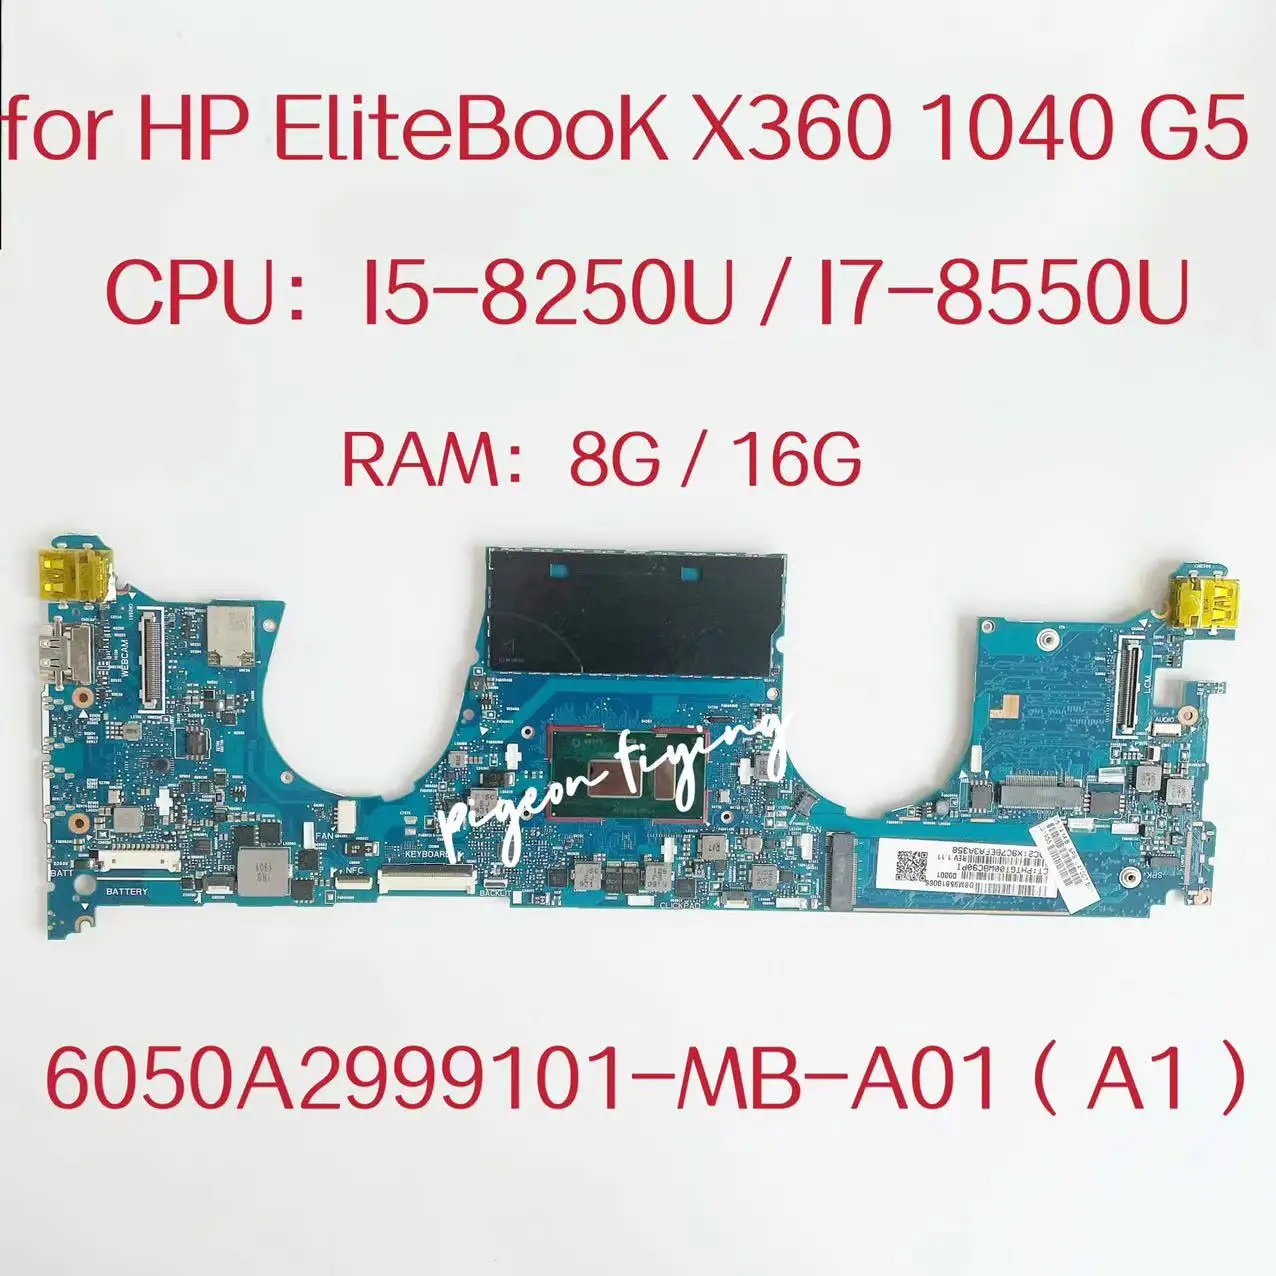 

6050A2999101-MB-A01 Mainboard for For HP EliteBook X360 1040 G5 Laptop Motherboard CPU:I5-8250U /8350U I7-8550U RAM:8GB/16GB